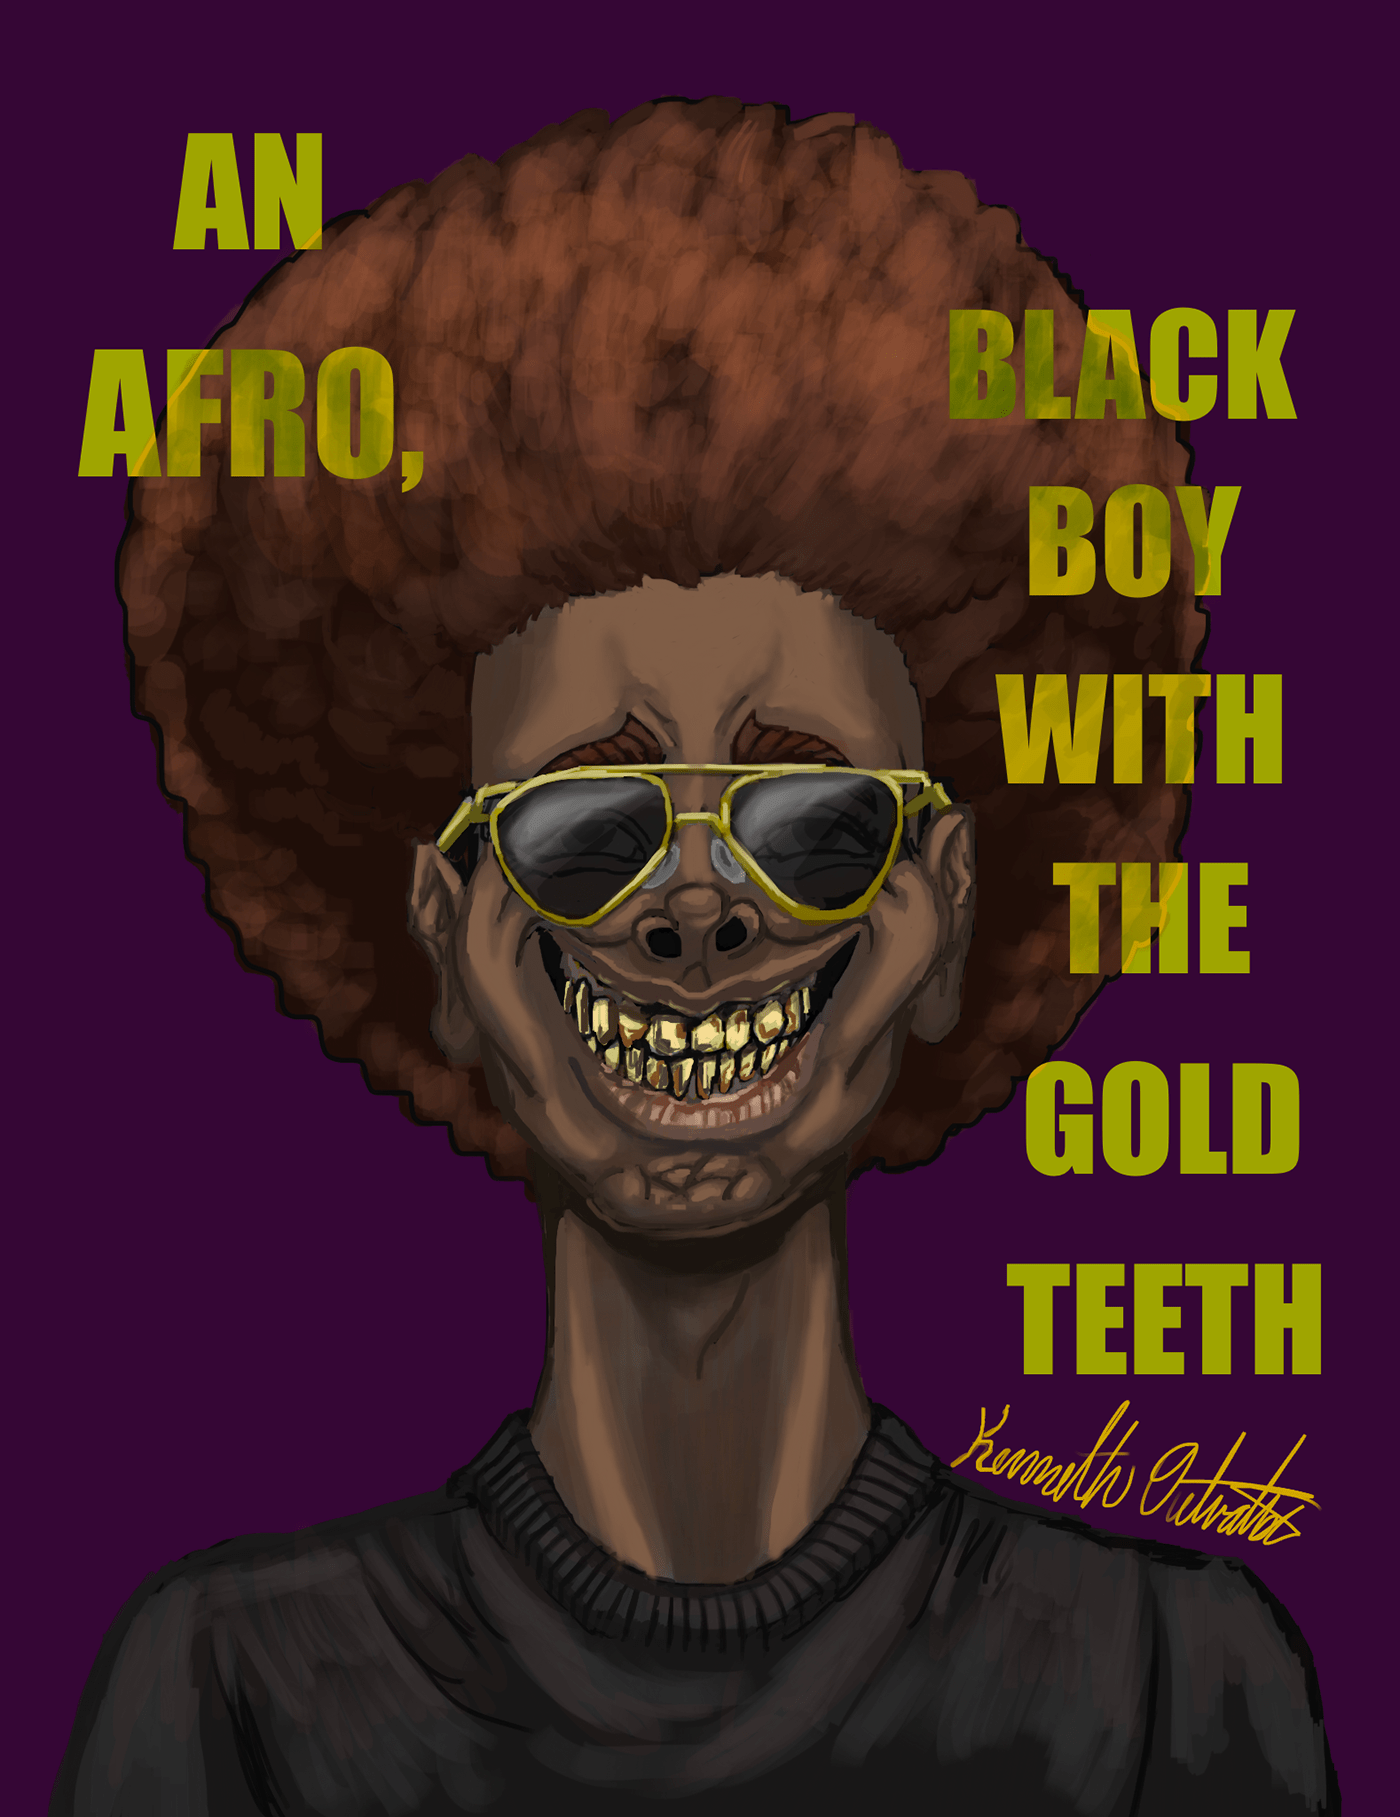 afro aviators Black Boy black shirt Grills inspired art from lyrics lil nas x mouth grill